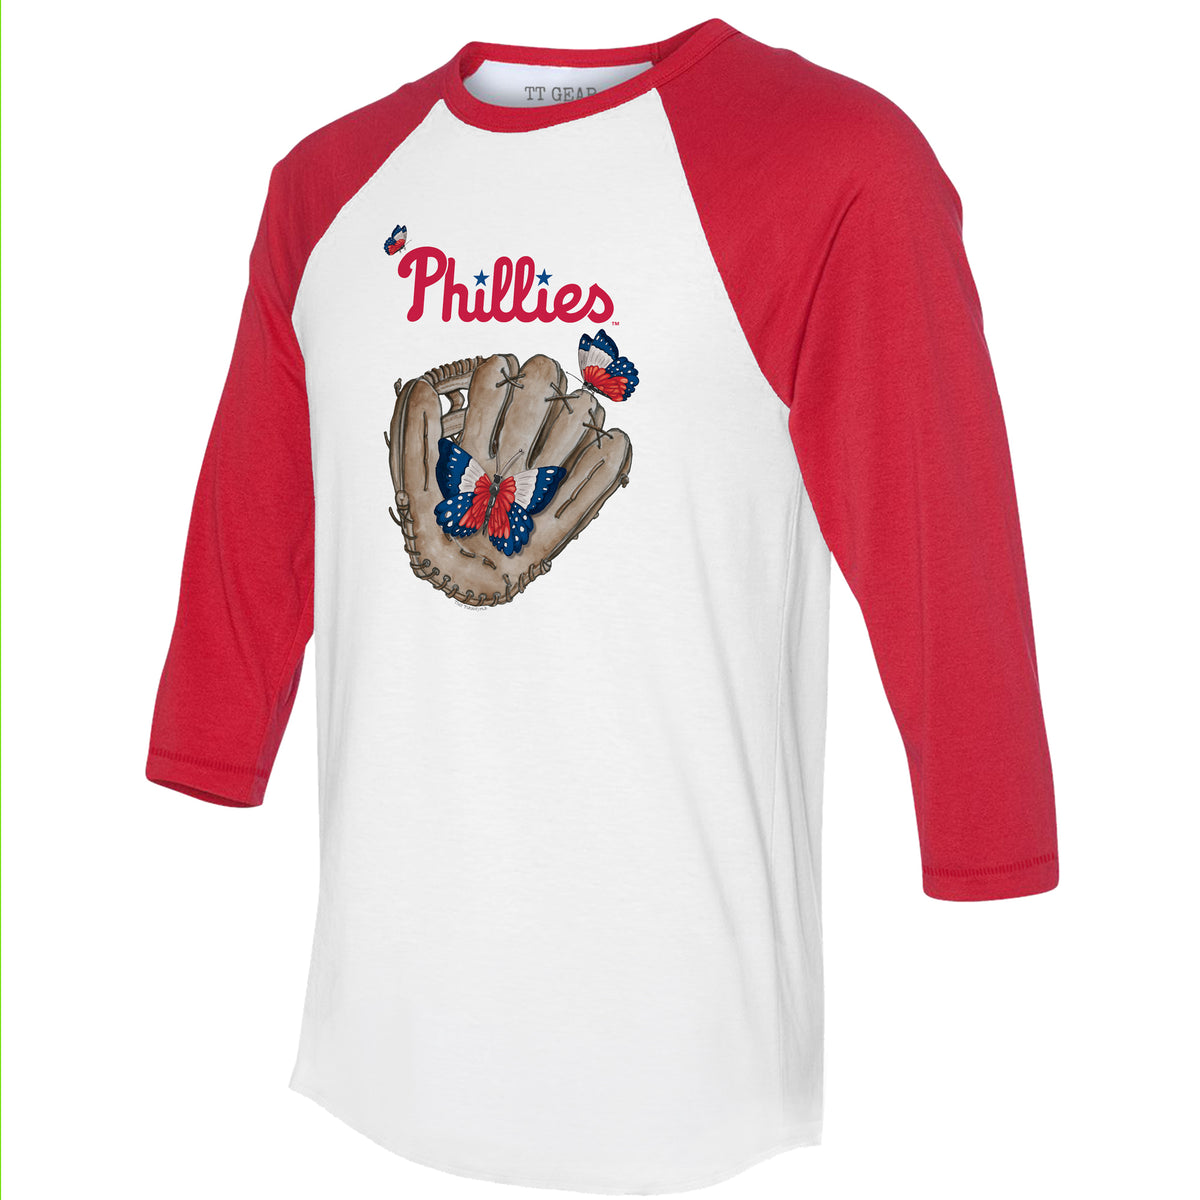 Philadelphia Phillies Butterfly Glove 3/4 Red Sleeve Raglan